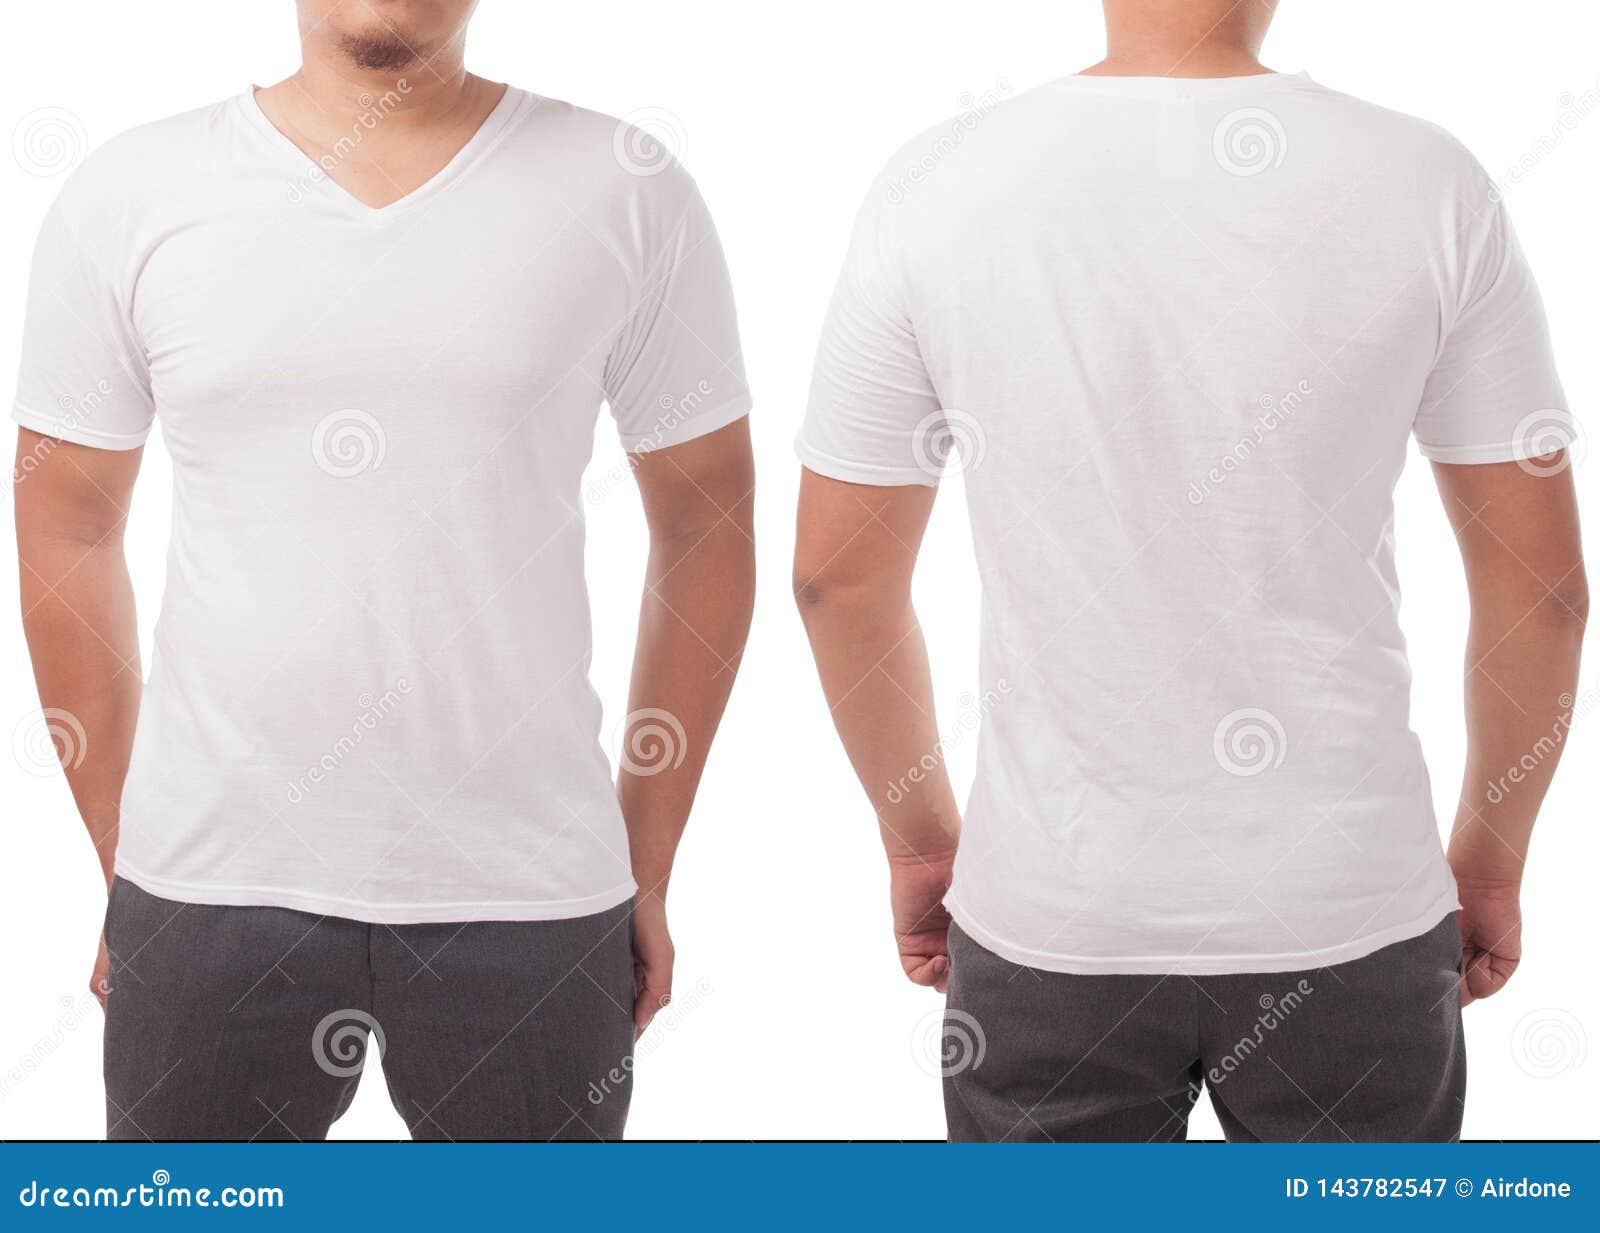 White V-Neck Shirt Design Template Stock Image - Image of cotton ...